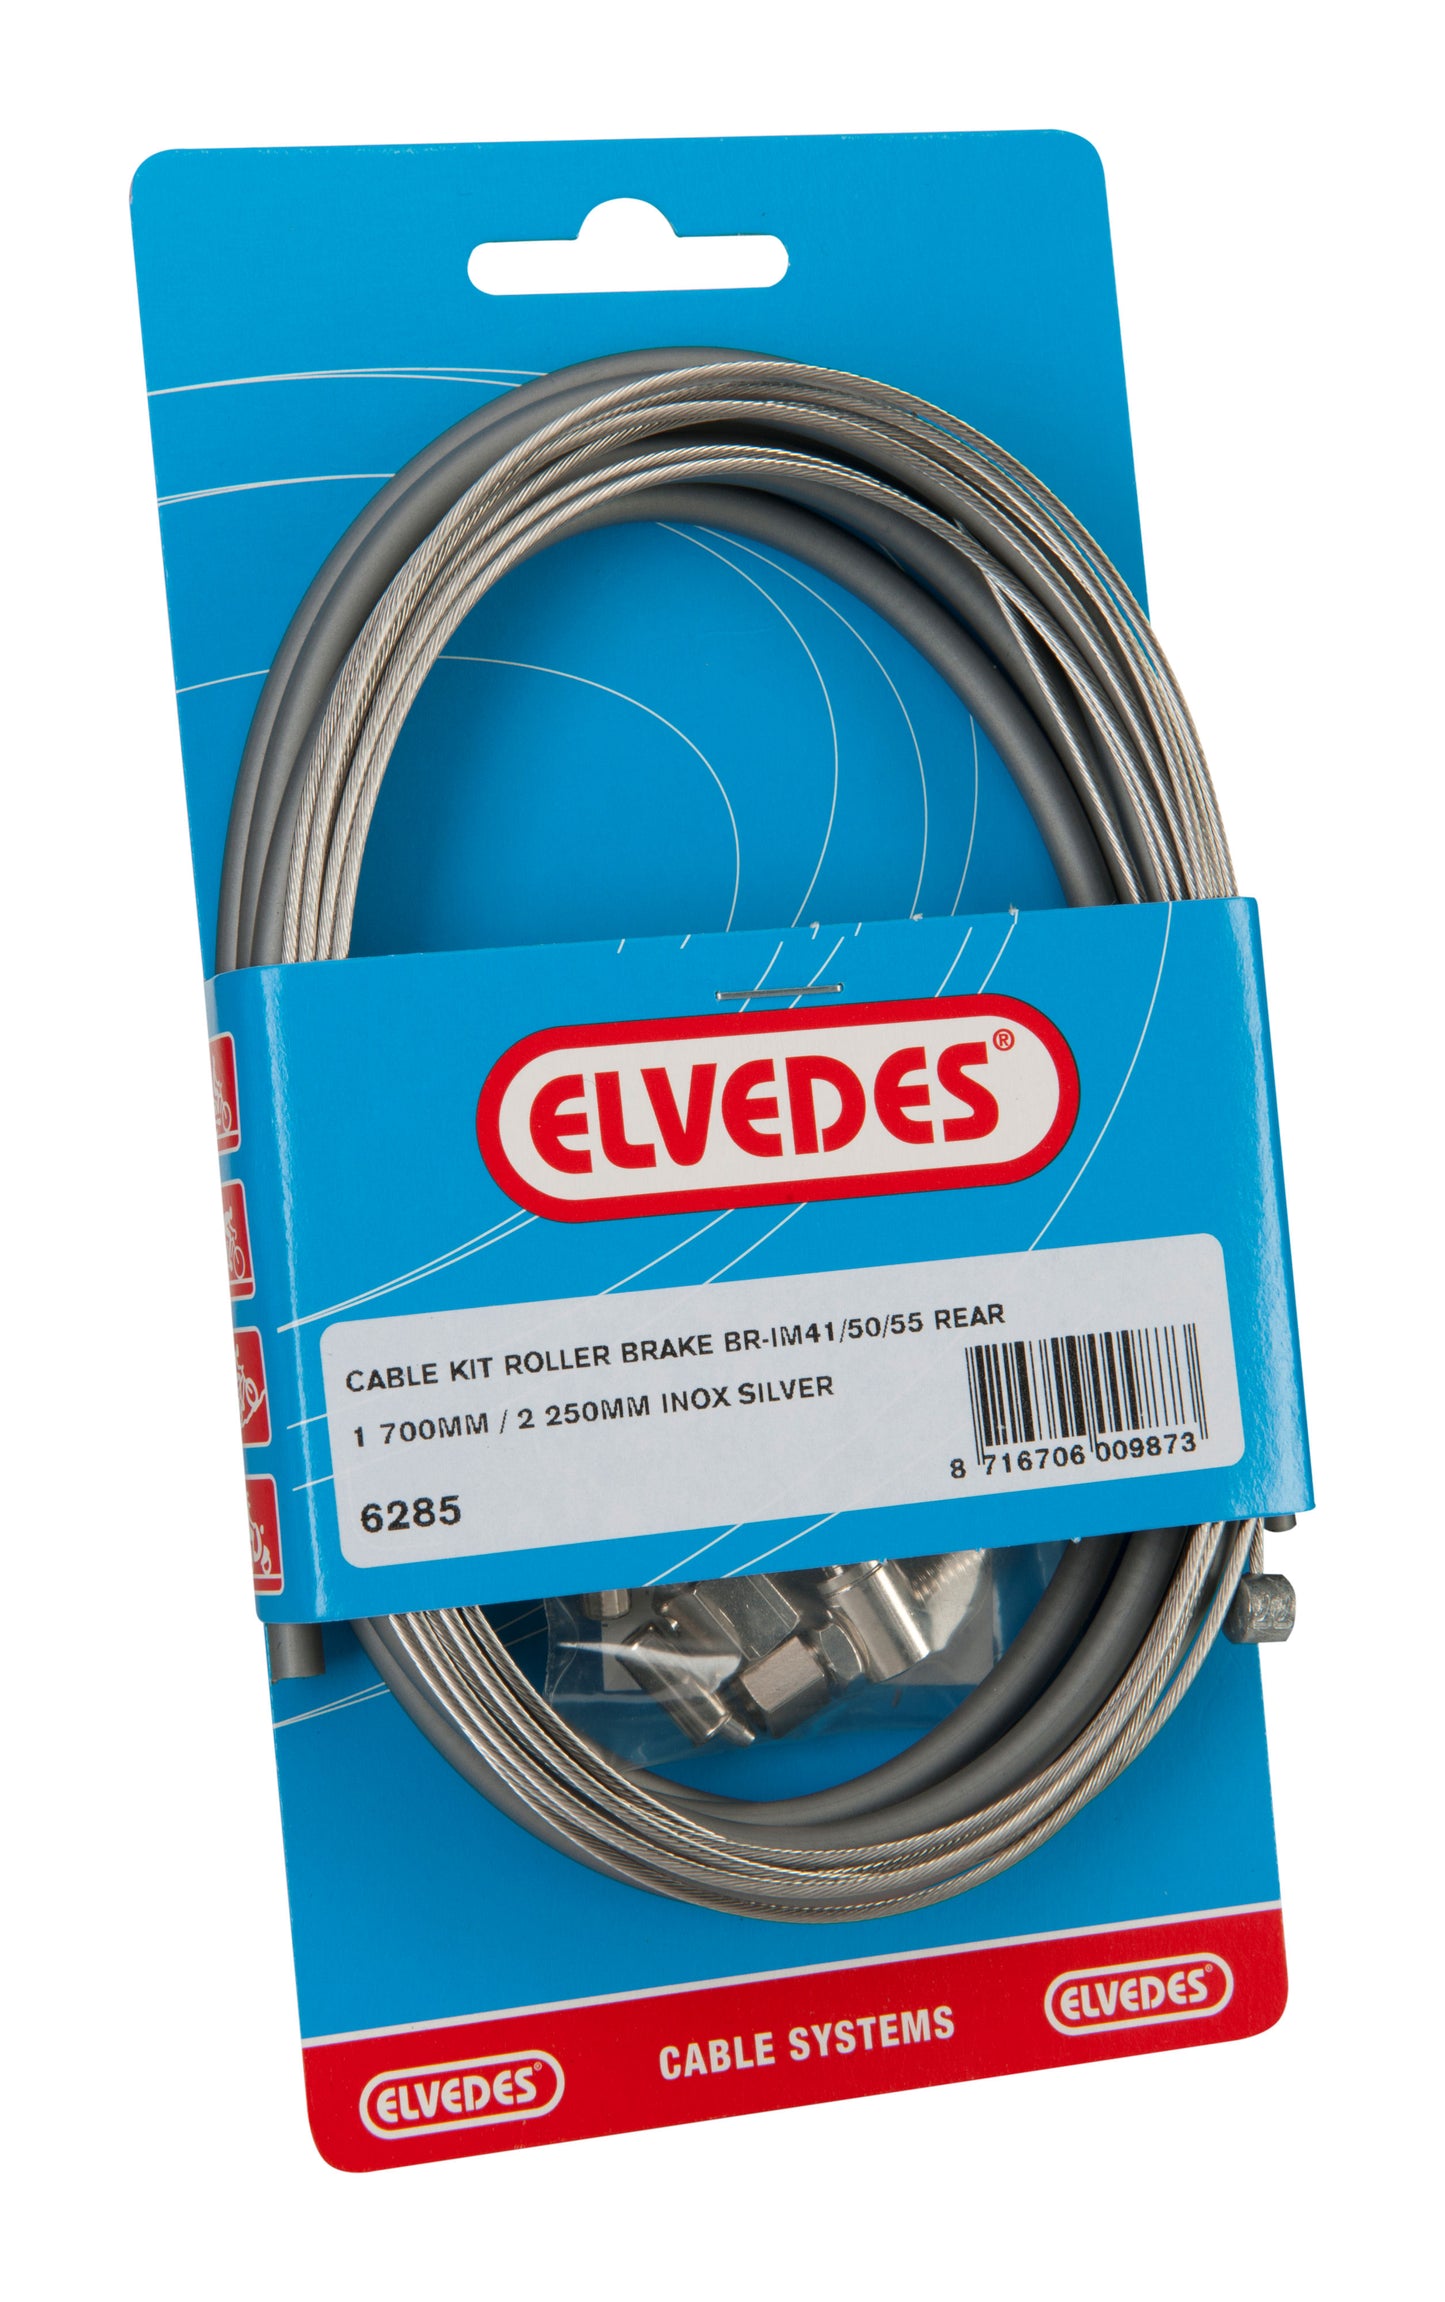 Kit cavo rollerbrake Elvedes BR -IM85 81 55 45 1700mm 2250mm in acciaio inossidabile - argento (su mappa)